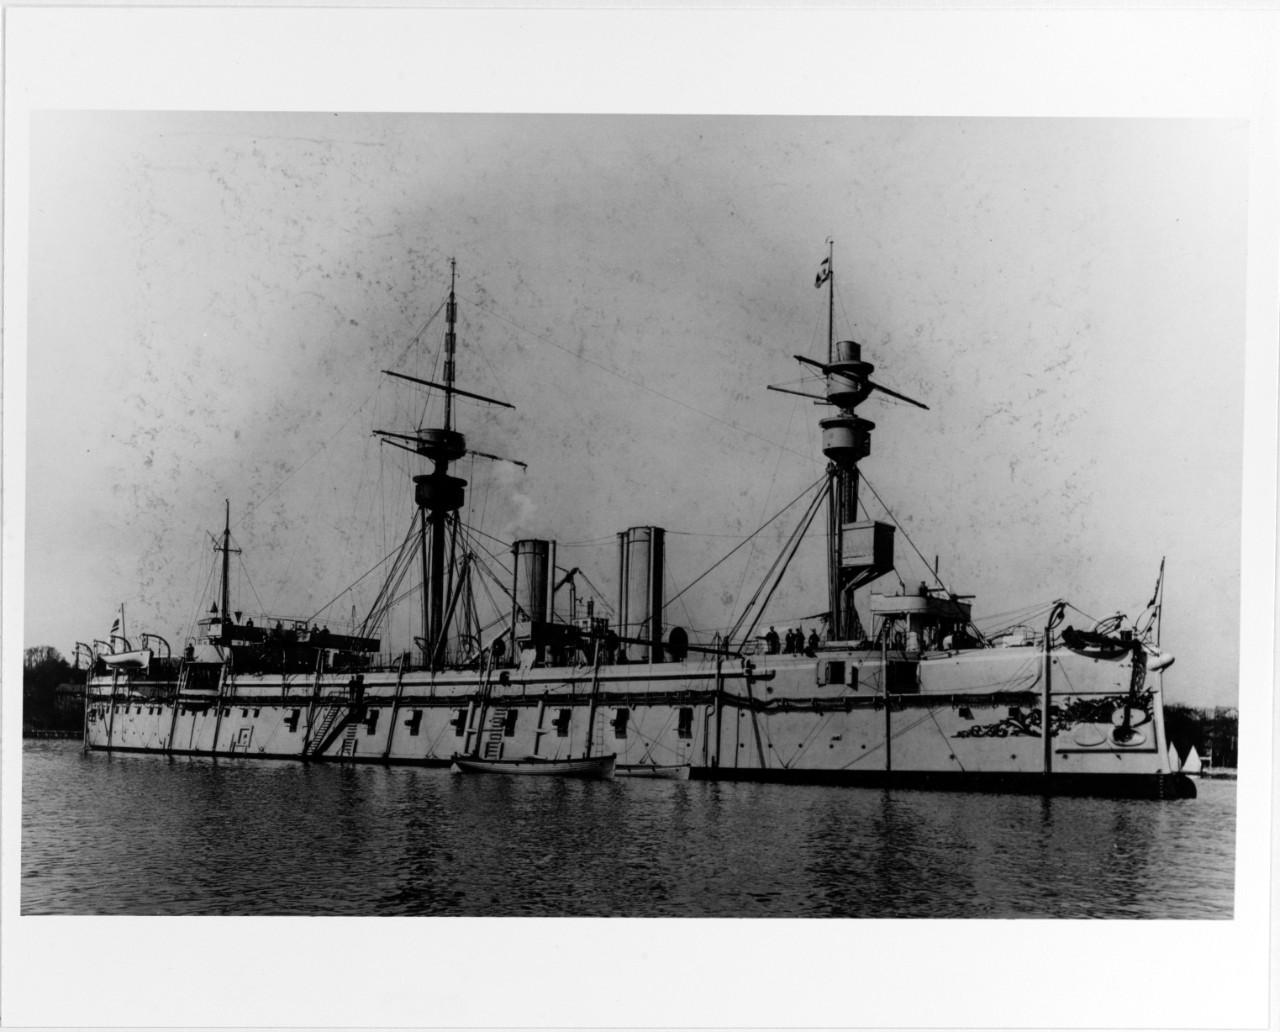 KONIG WILHELM (German Battleship, 1868-1921)